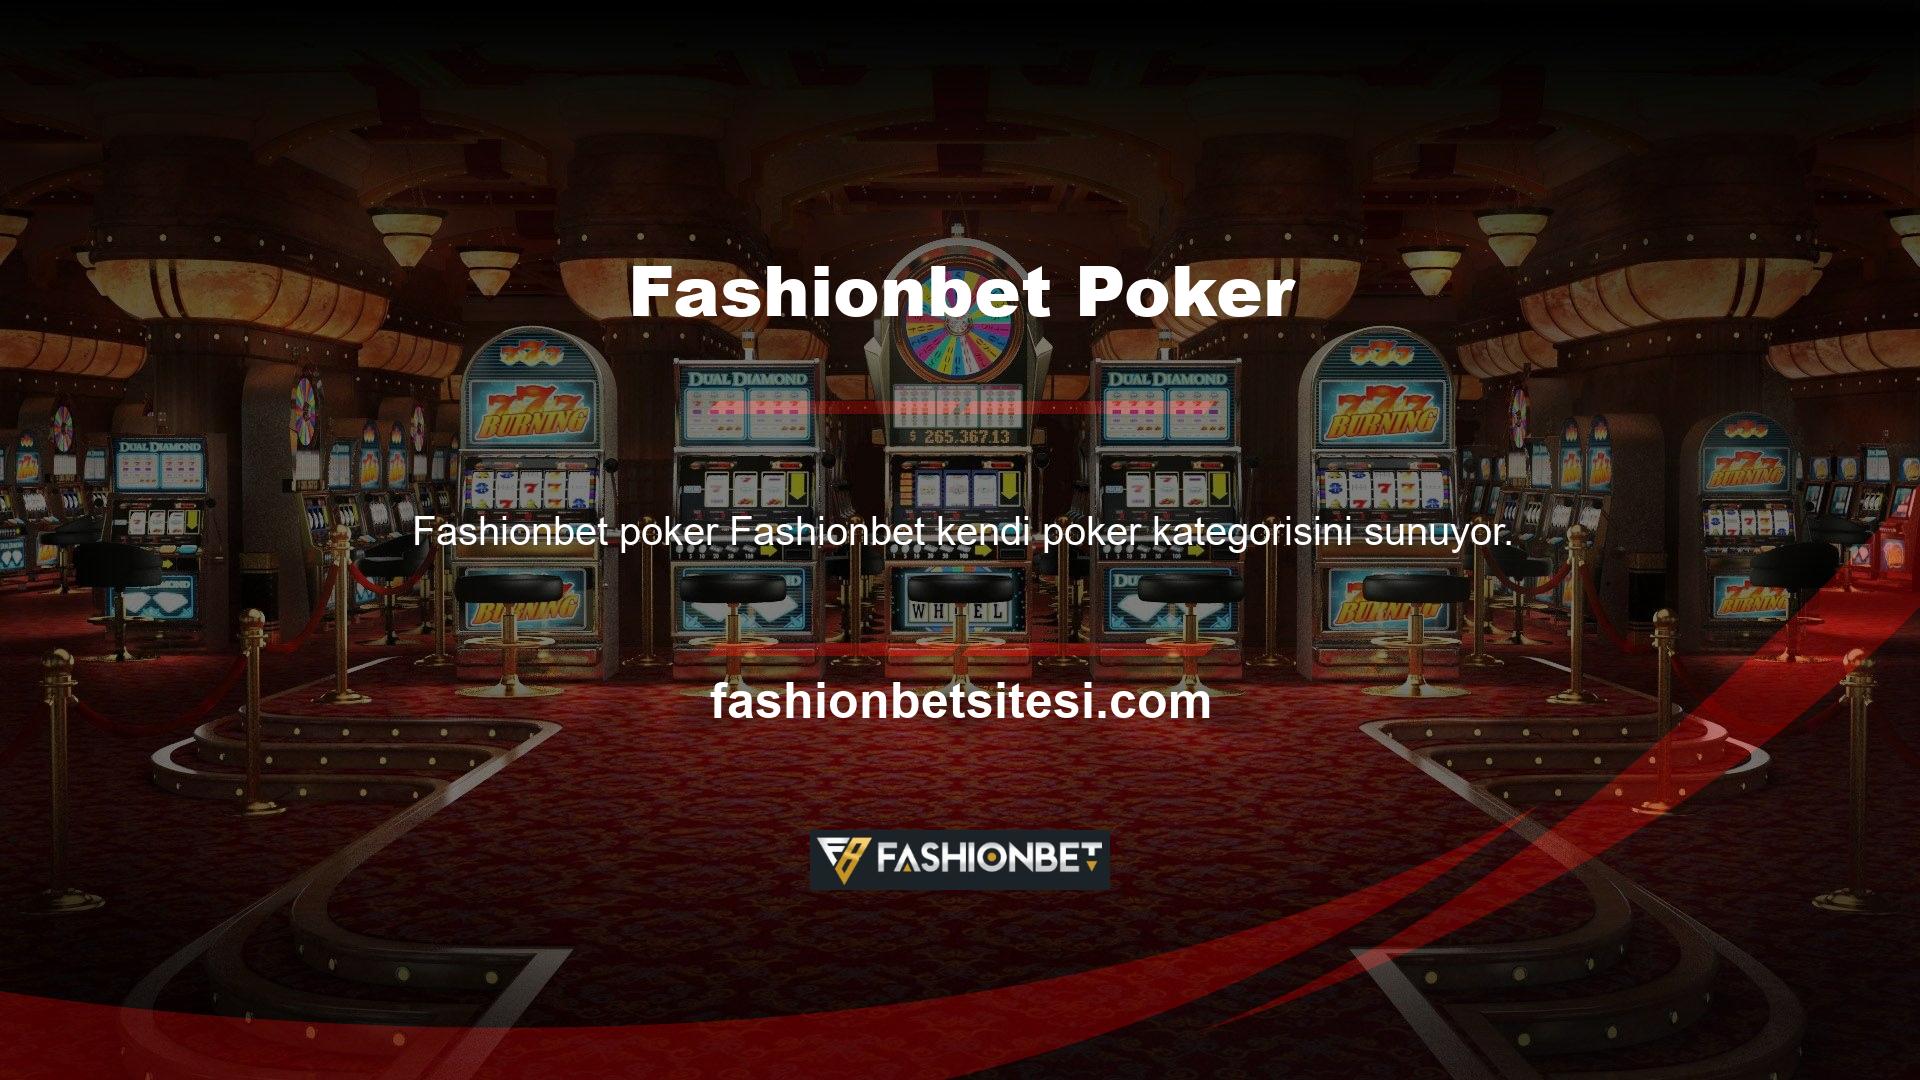 Fashionbet Poker'in canlı poker bölümü Texas Hold'em, Omaha, Turkey ve Craps'i içerir